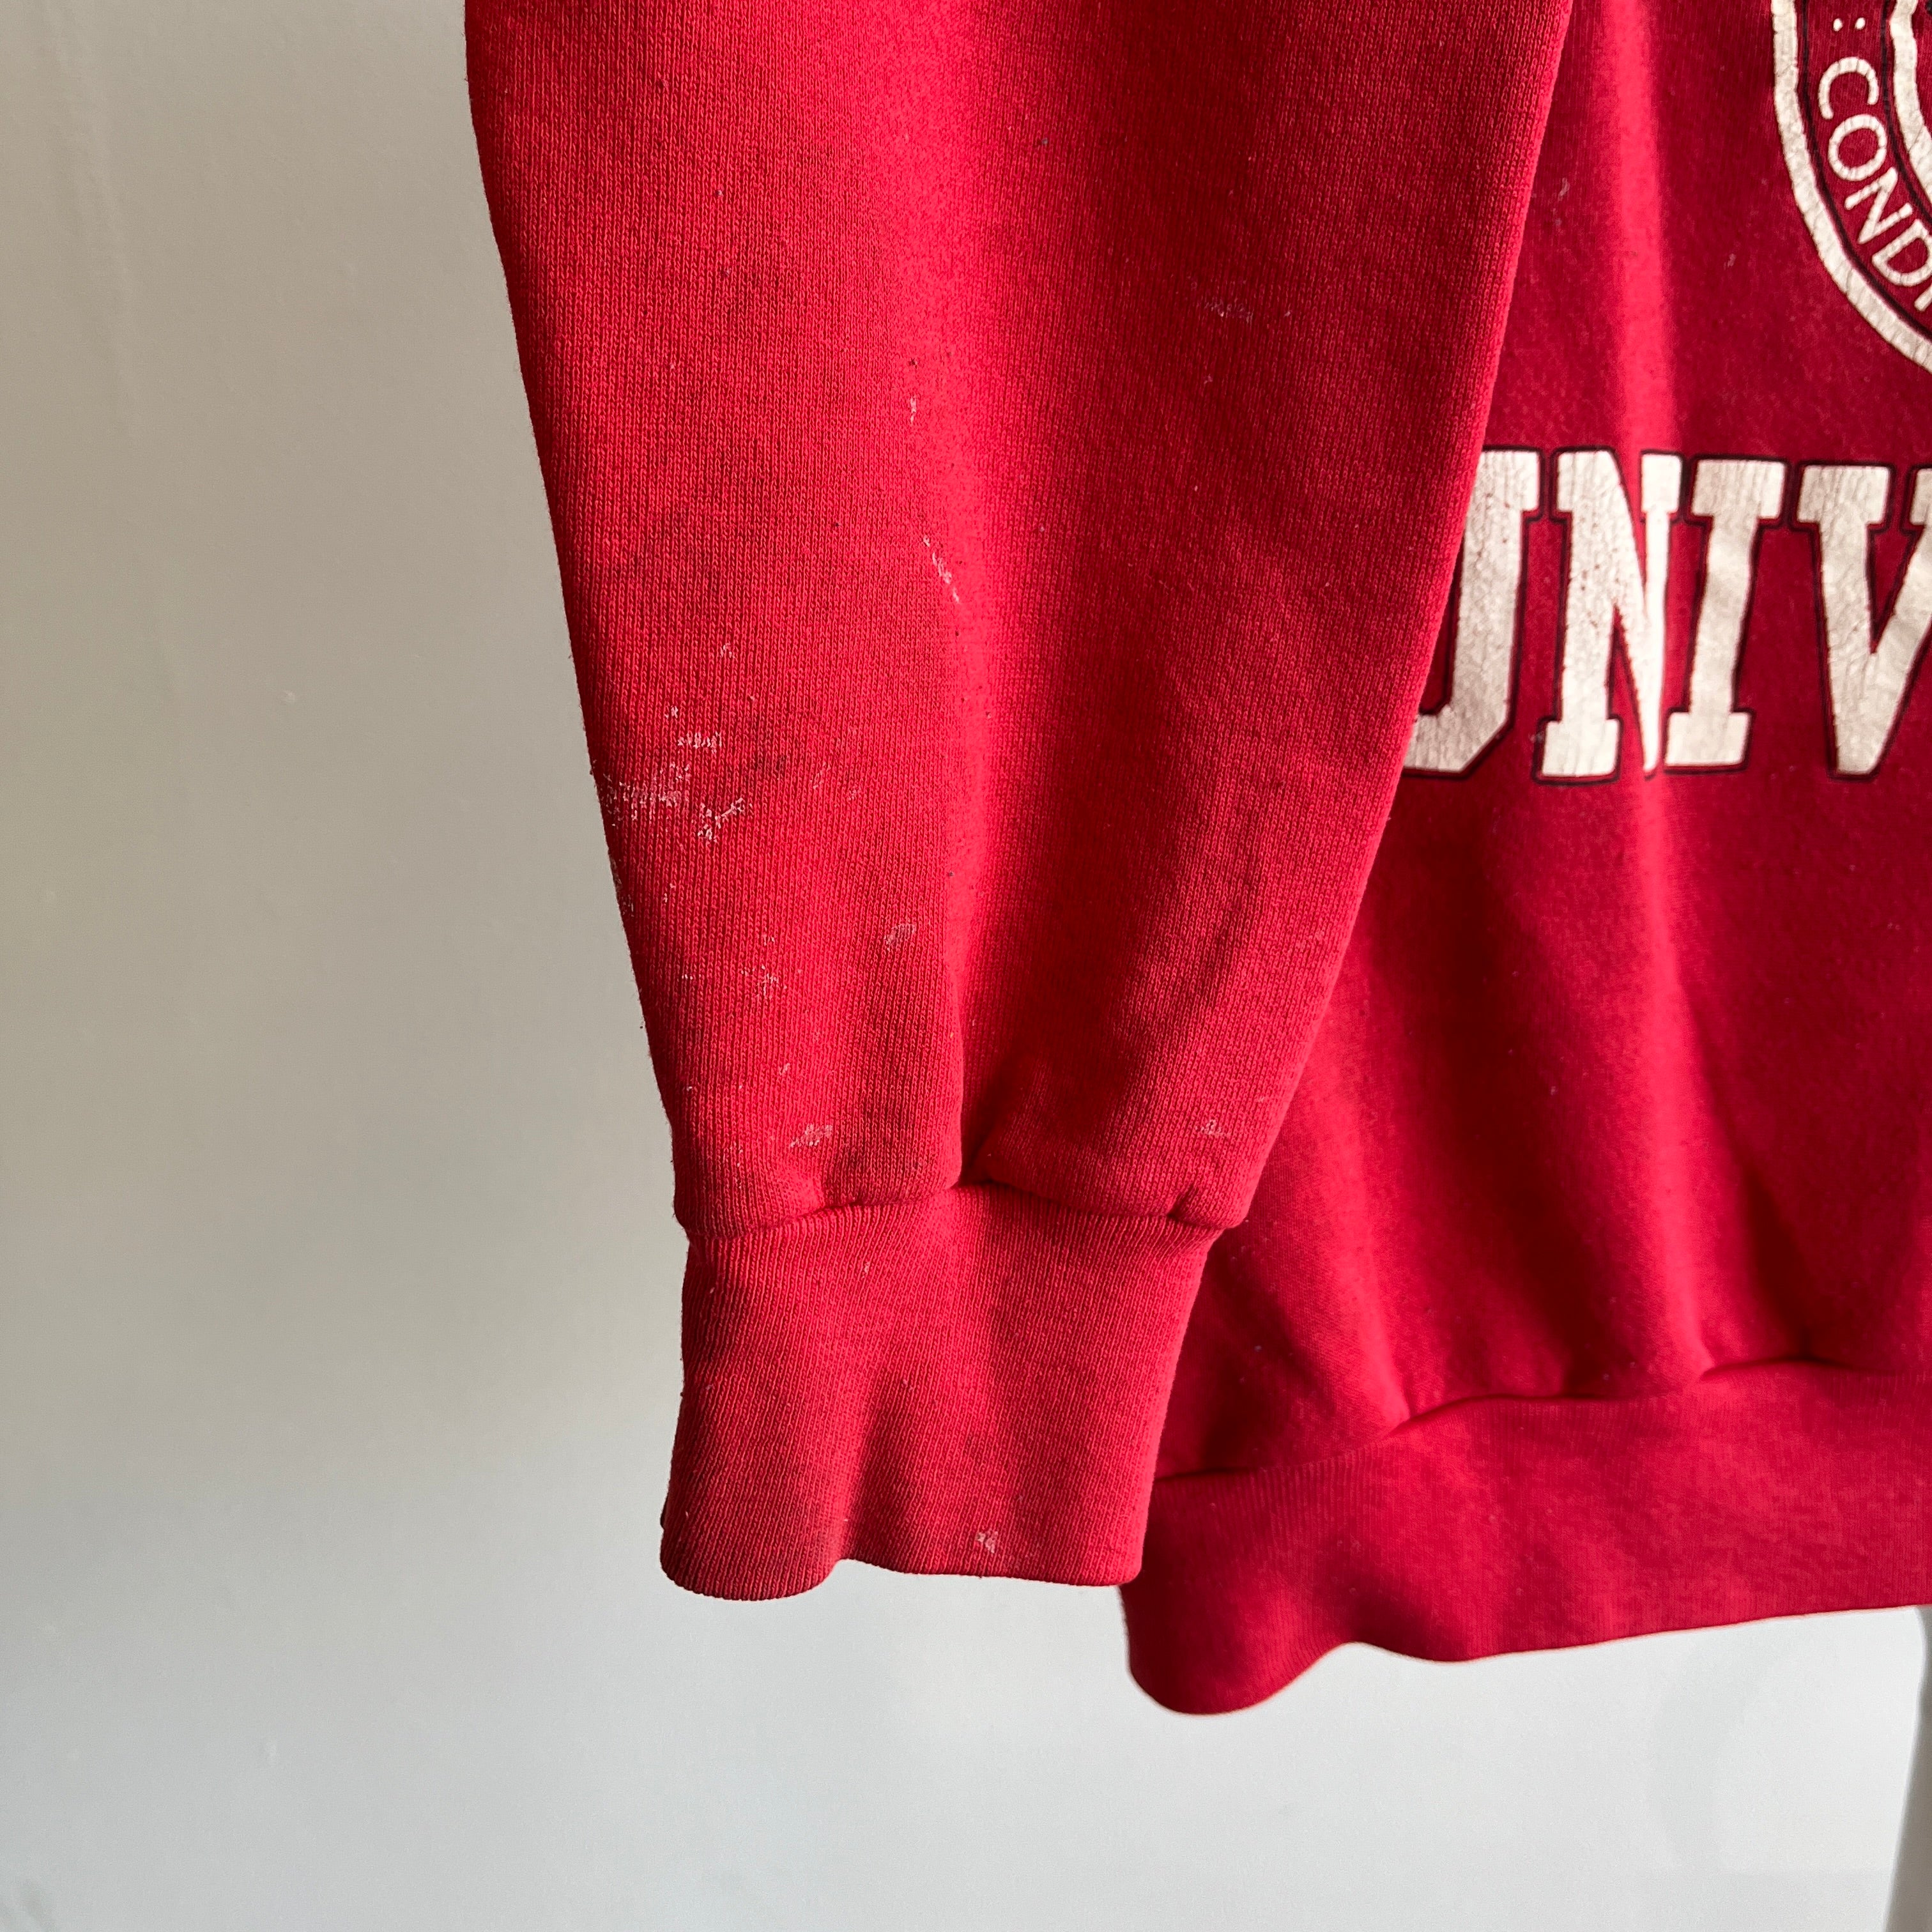 1980s Super Thrashed Boston University Sweatshirt by Signal – Red